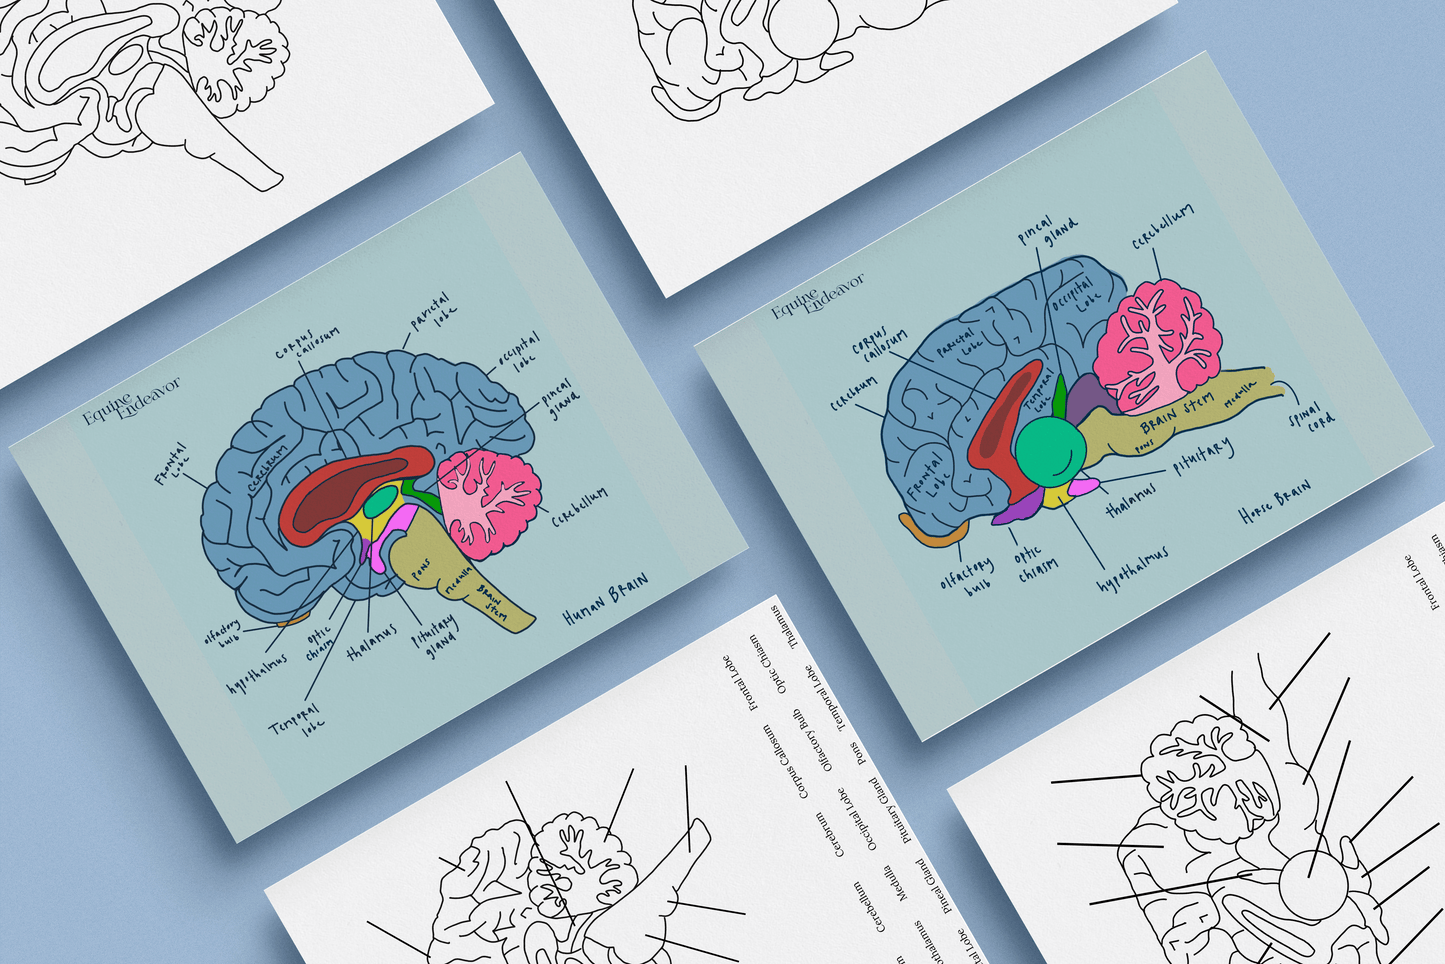 Equine & Human Brain Comparative Series